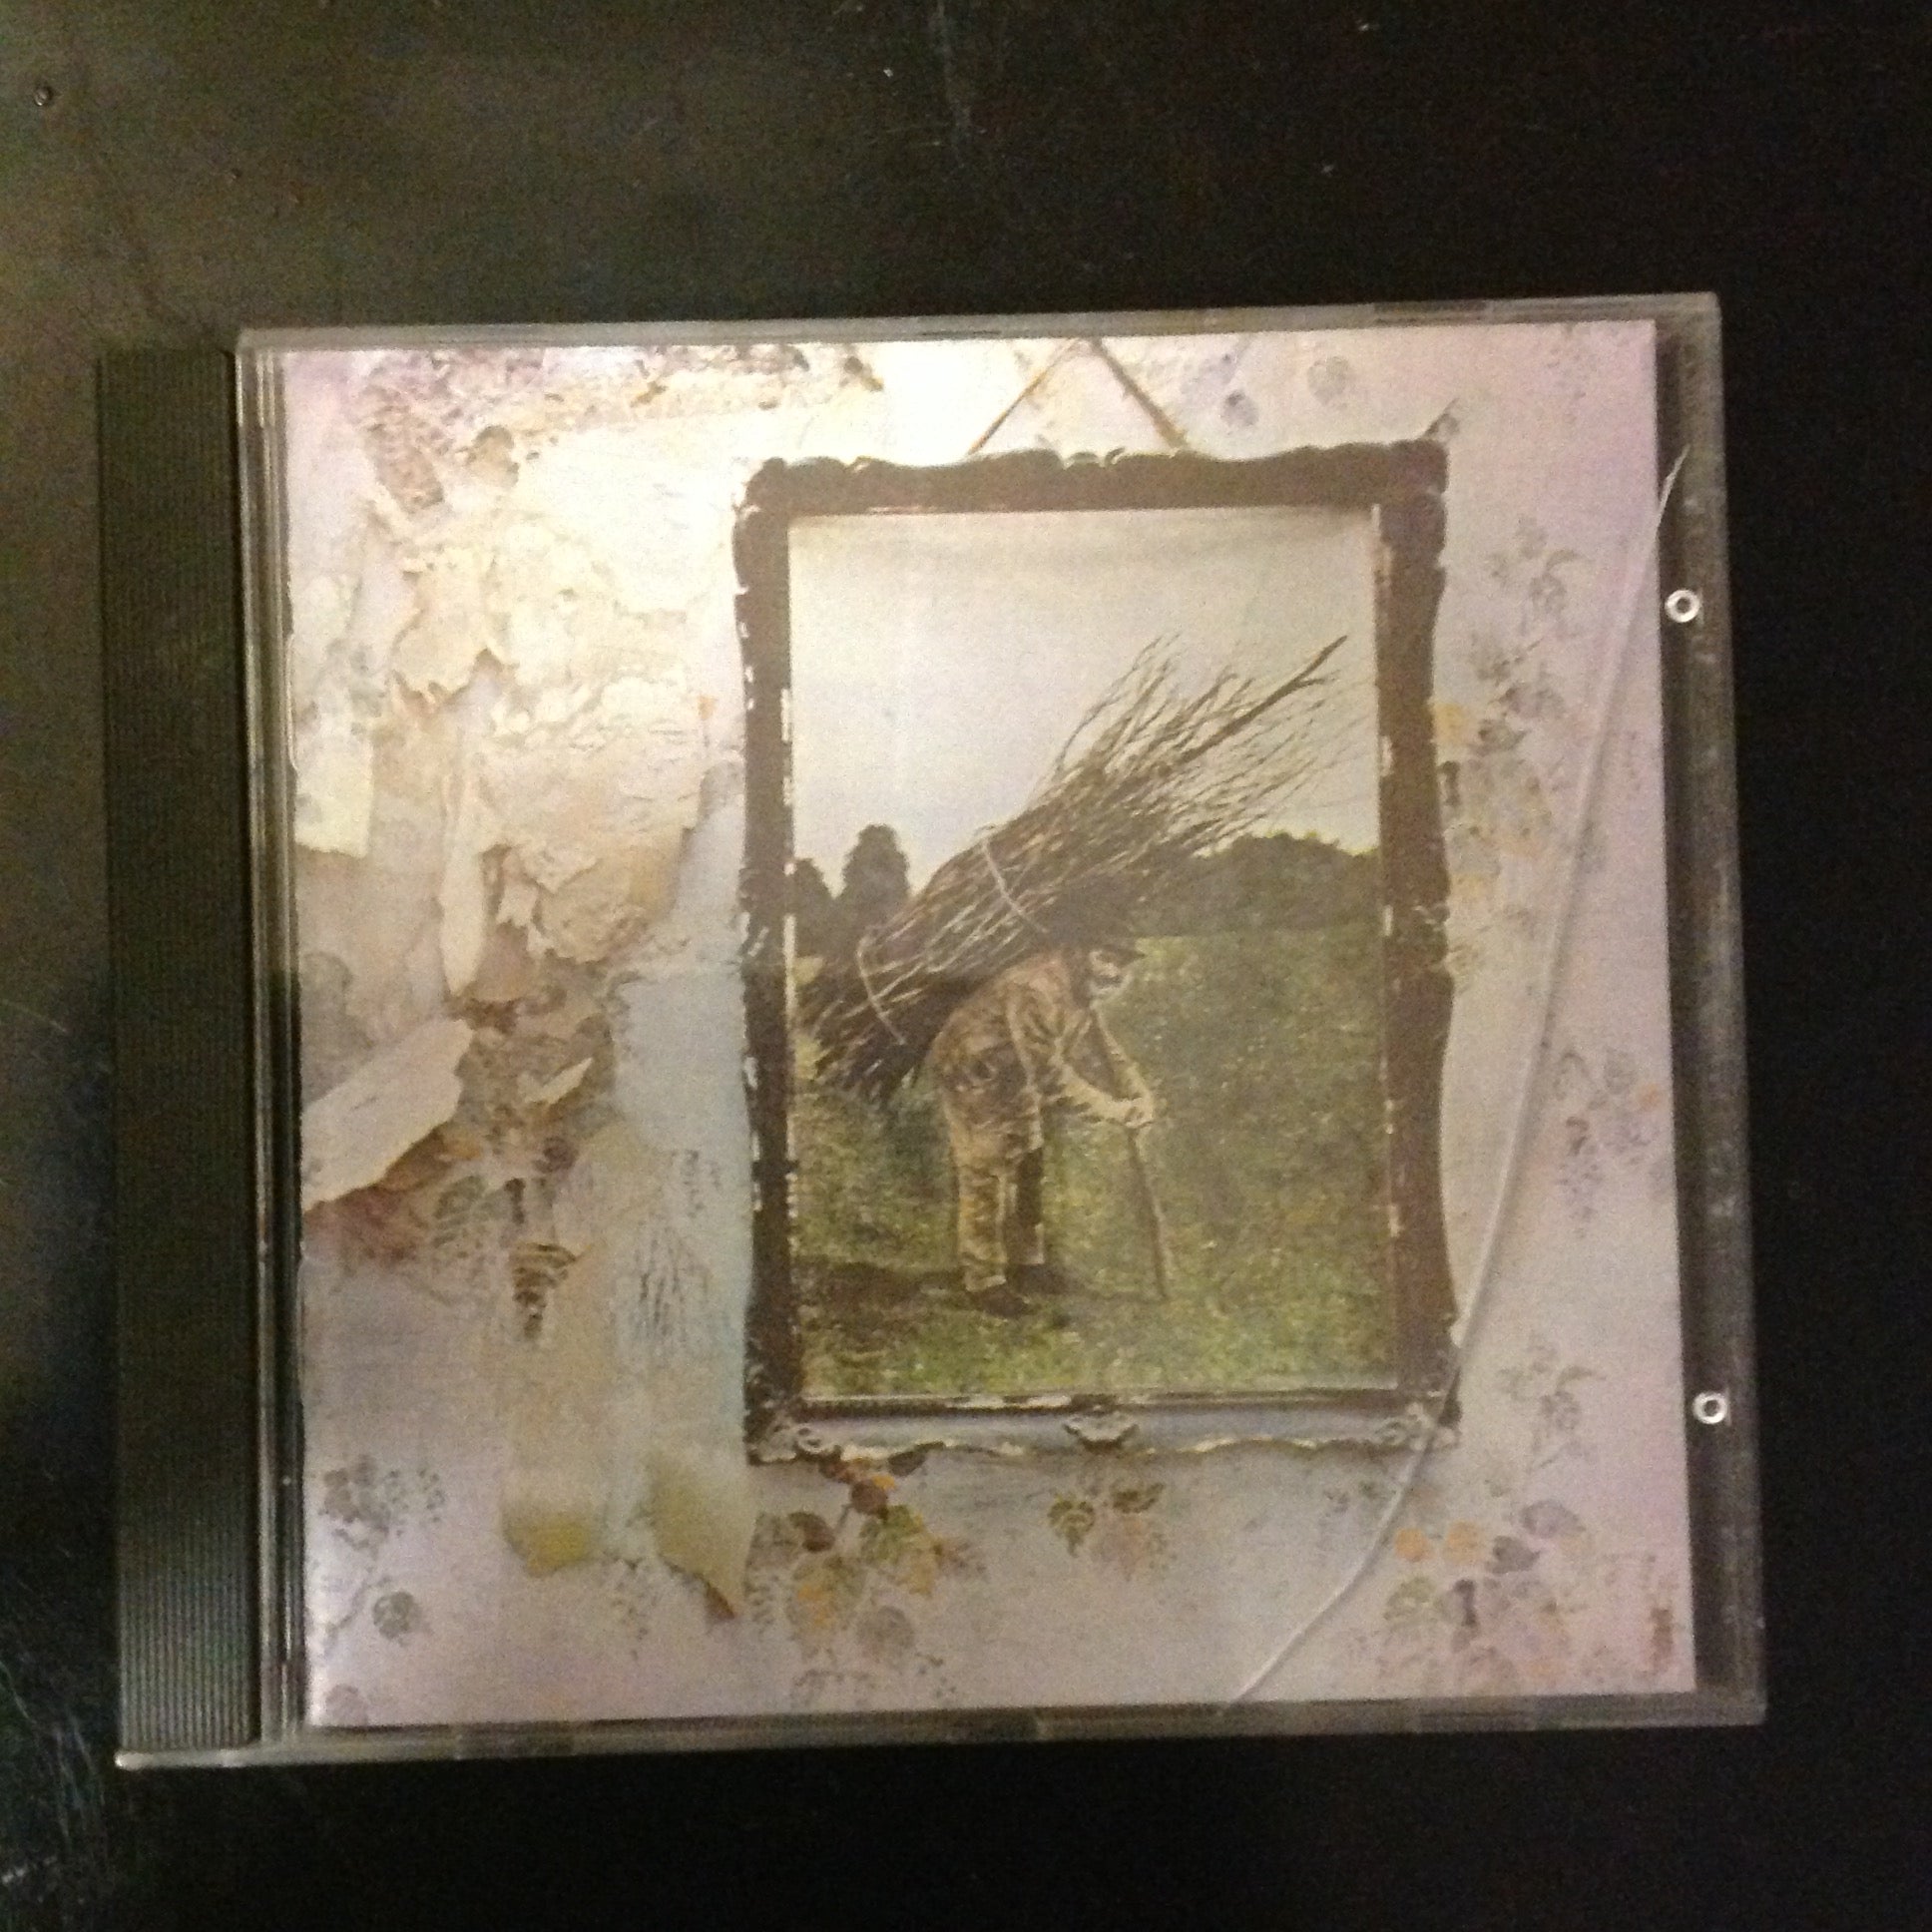 CD Led Zeppelin Untitled Atlantic 19129-2 Europe 250 008